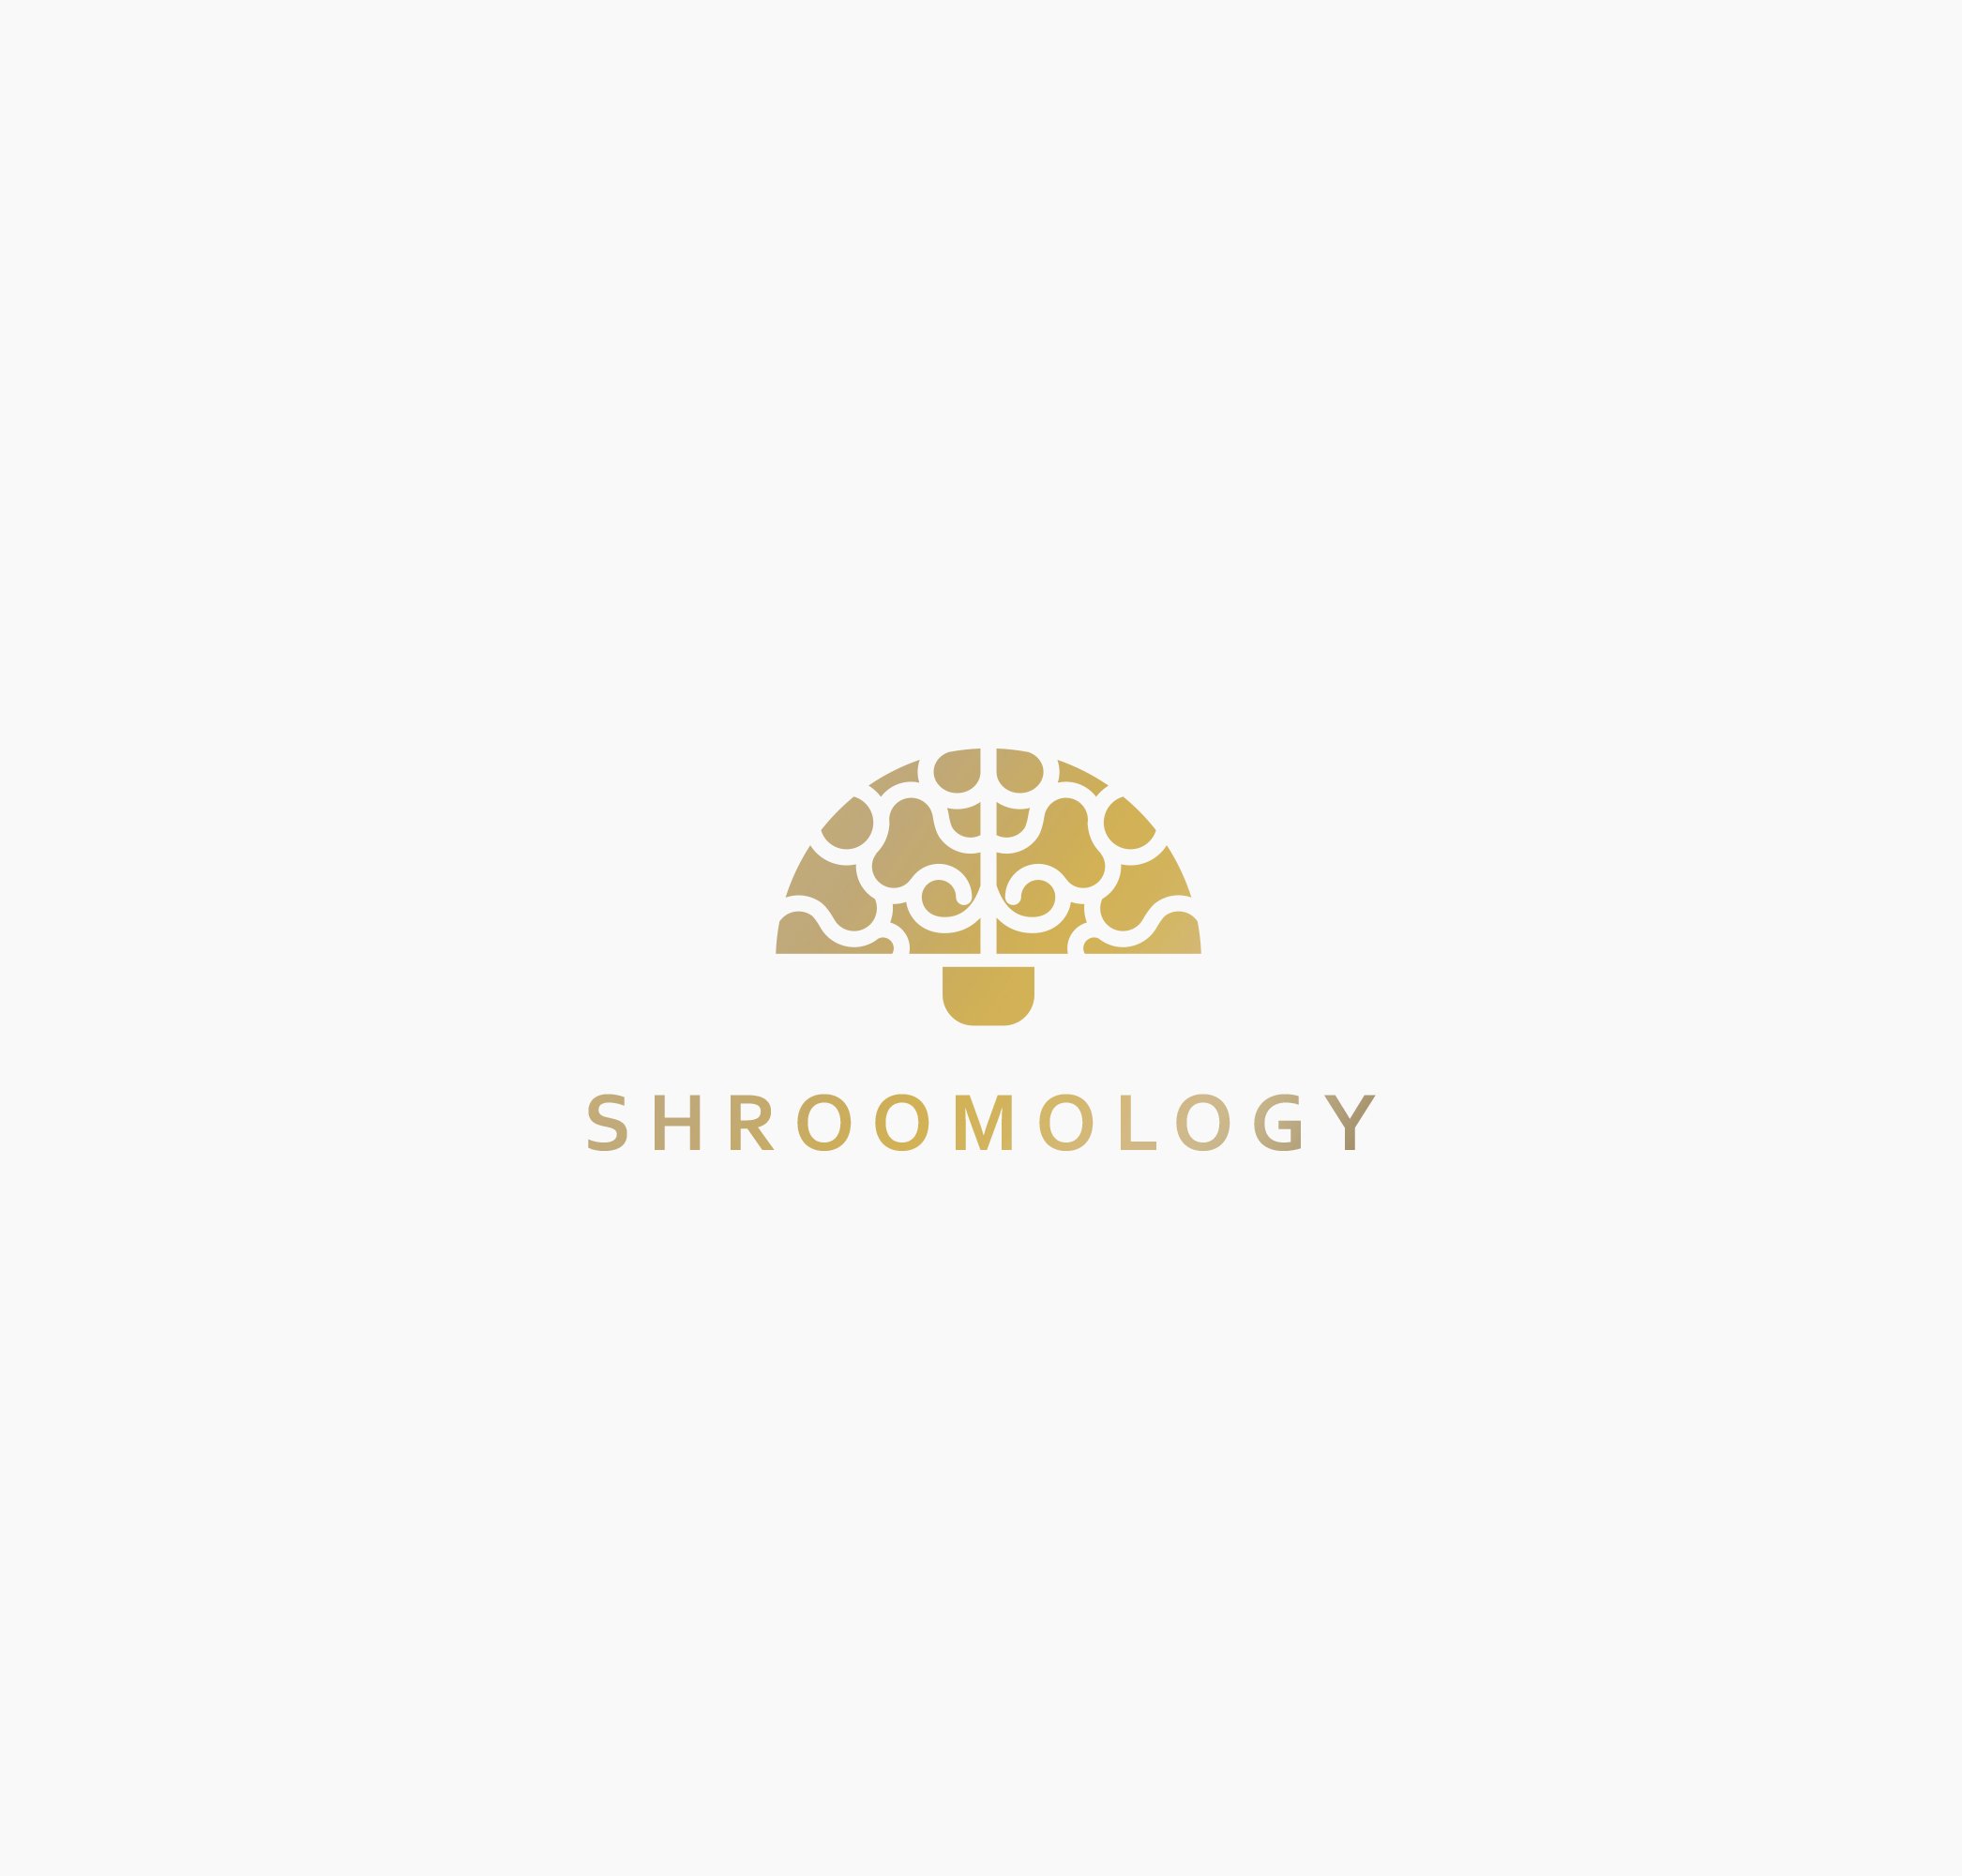 Shroomology Logo.JPG